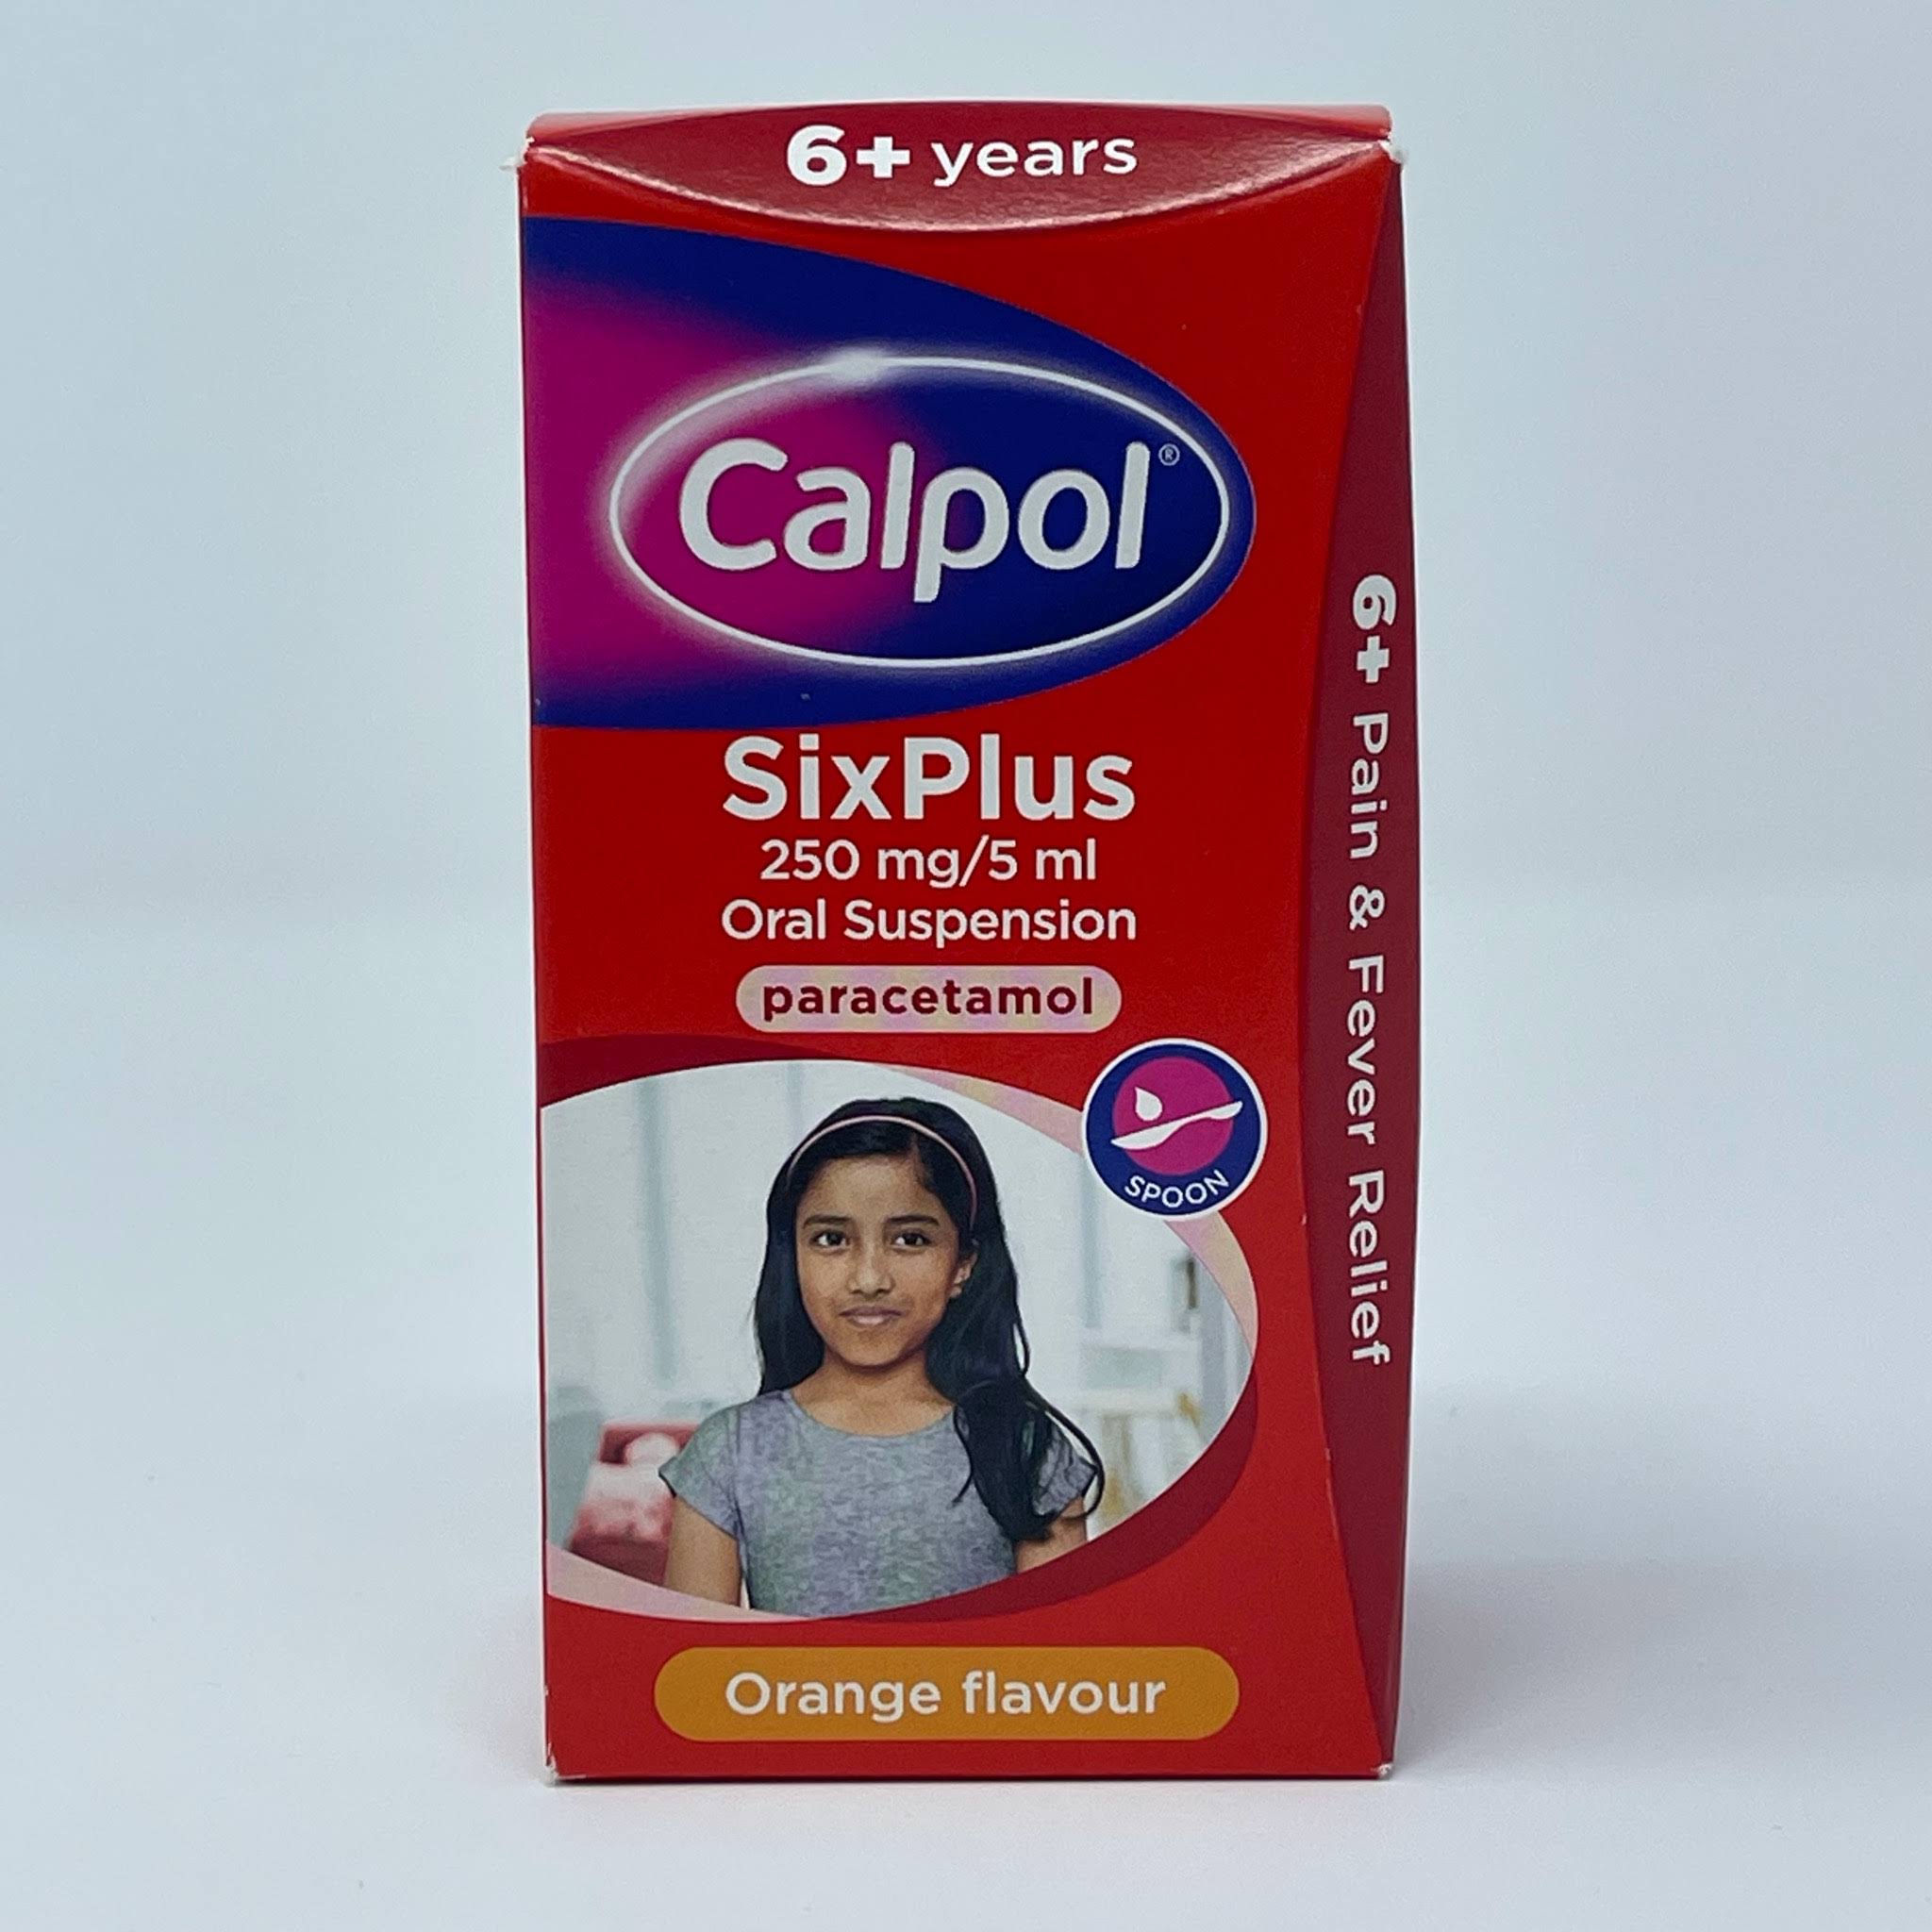 Calpol SixPlus Oral Suspension Paracetamol - 250mg, 6 plus years